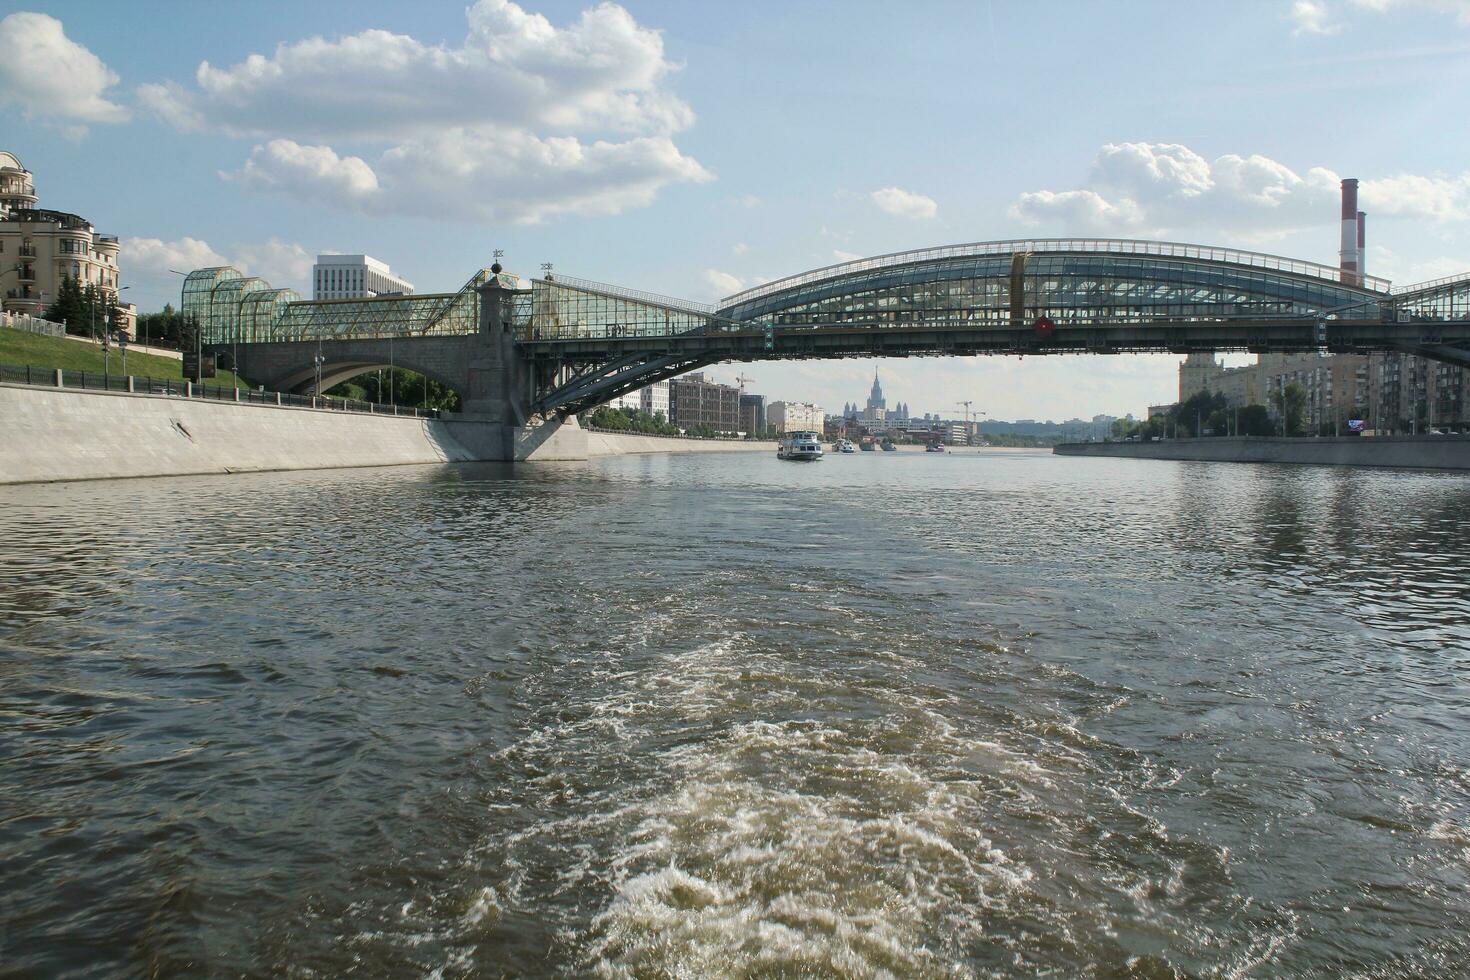 andreevskiy andreevsky brug aan de overkant de Moskou rivier- Bij zomer dag. boog van pushkinskiy pushkinsky voetganger brug. Moskou, Rusland - juni 22, 2023 foto